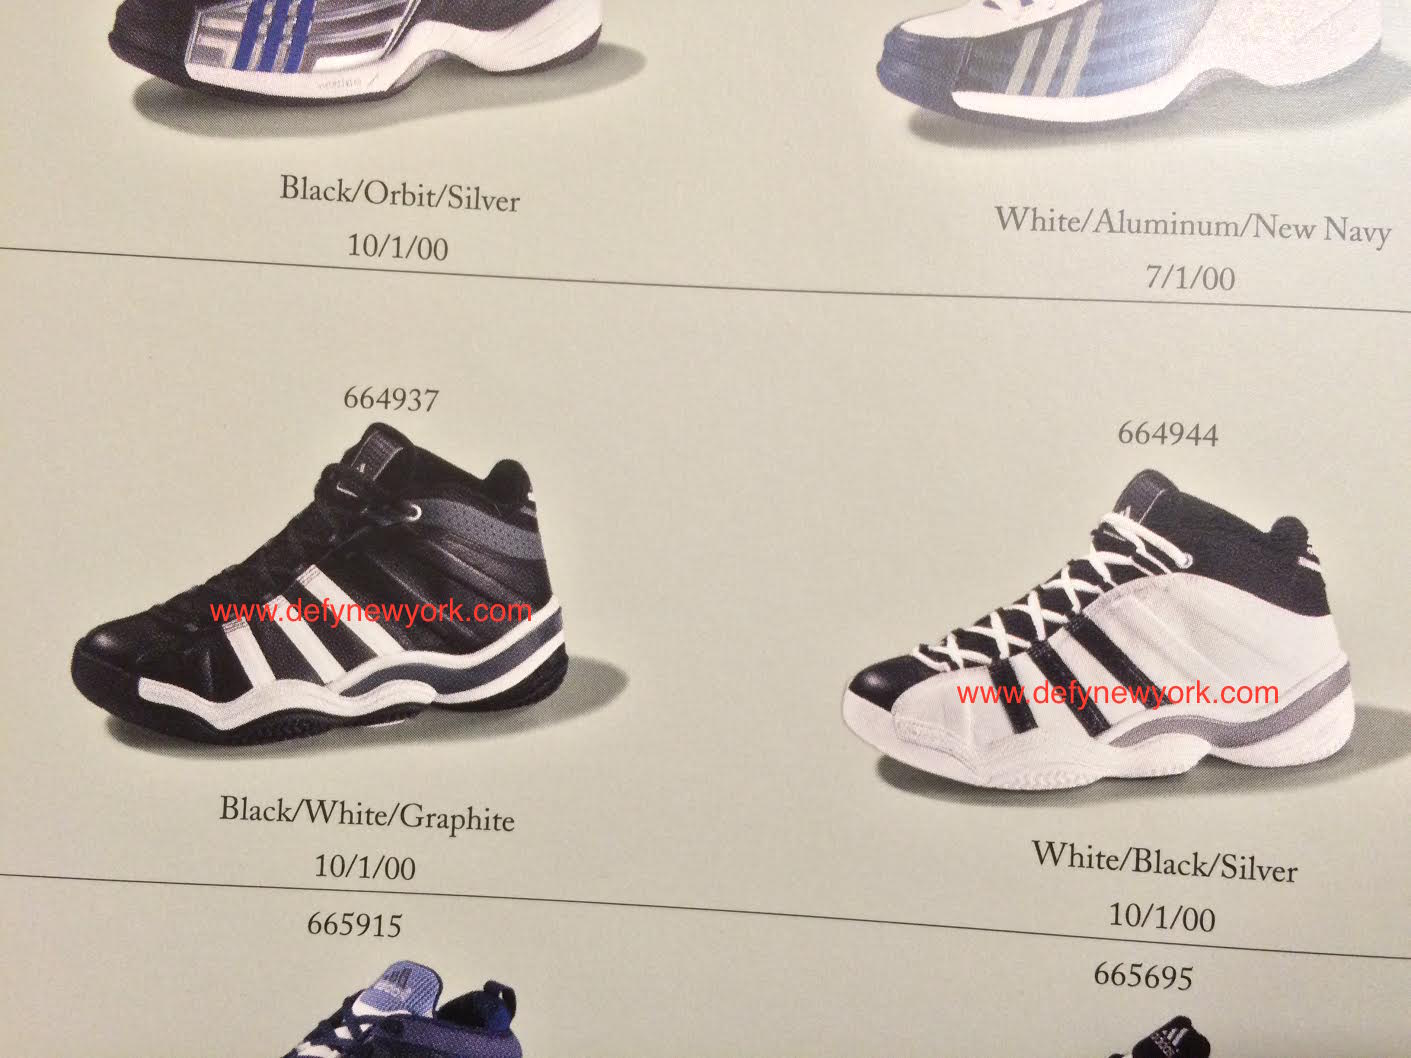 adidas basketball shoes 2000